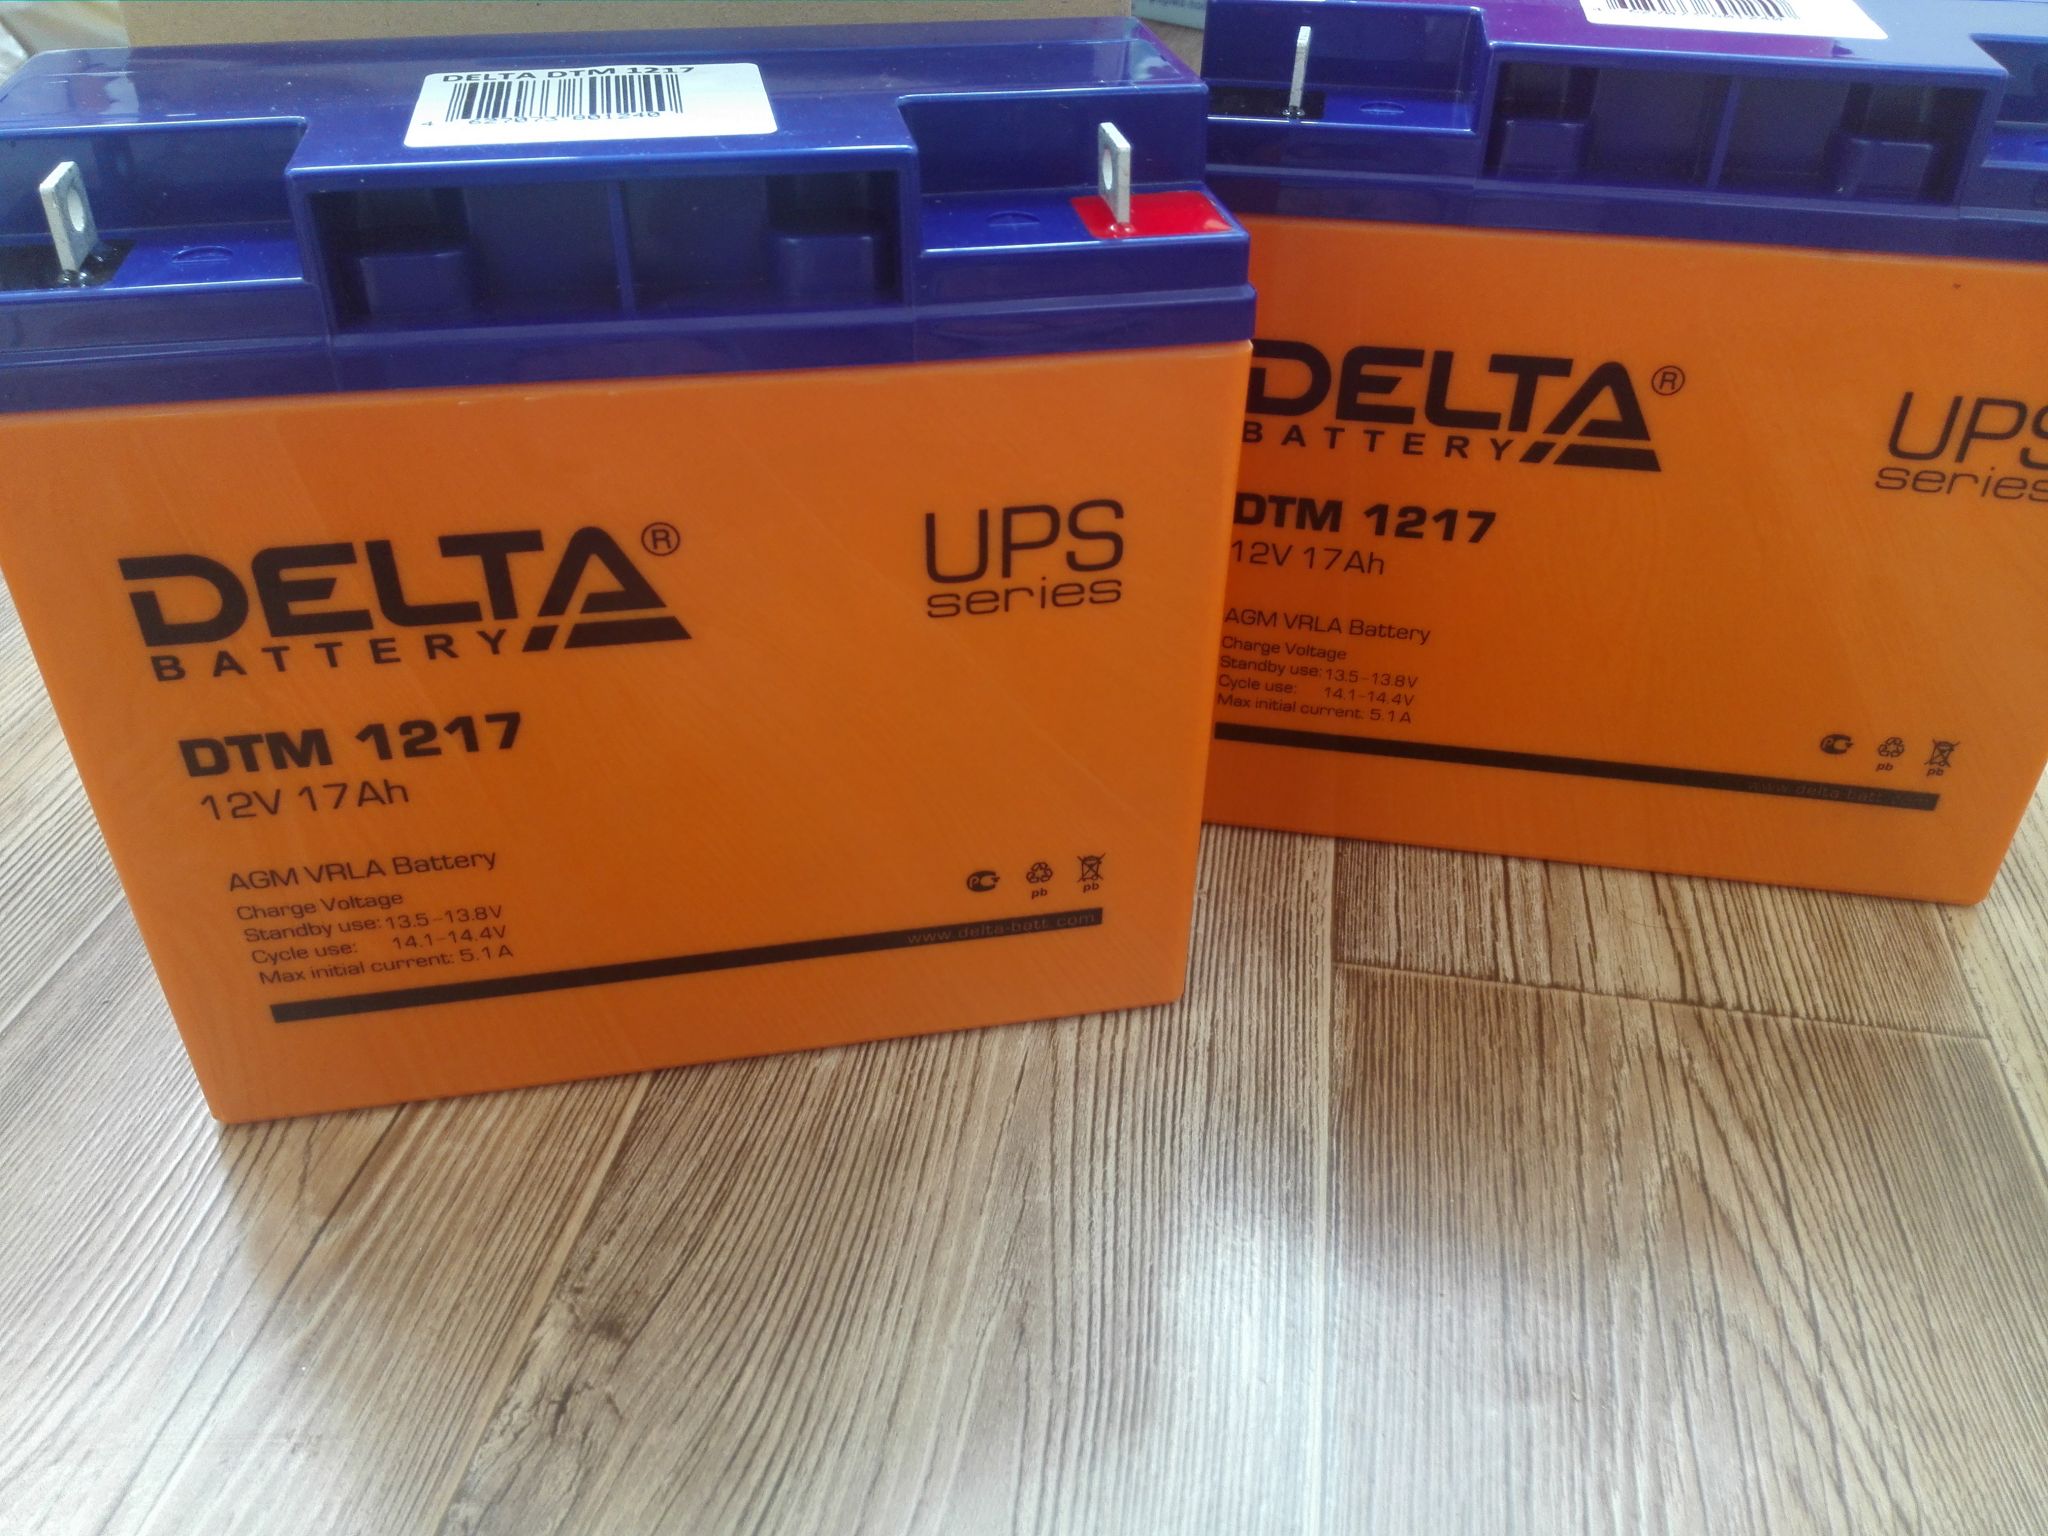 Battery 17 12. Аккумуляторная батарея для ИБП Delta DTM 1217 12в. Аккумуляторная батарея 12в 7ач Delta dtm1217. Аккумуляторная батарея Delta DTM 1217. Аккумулятор Delta DTM 1217 12v 17ah.